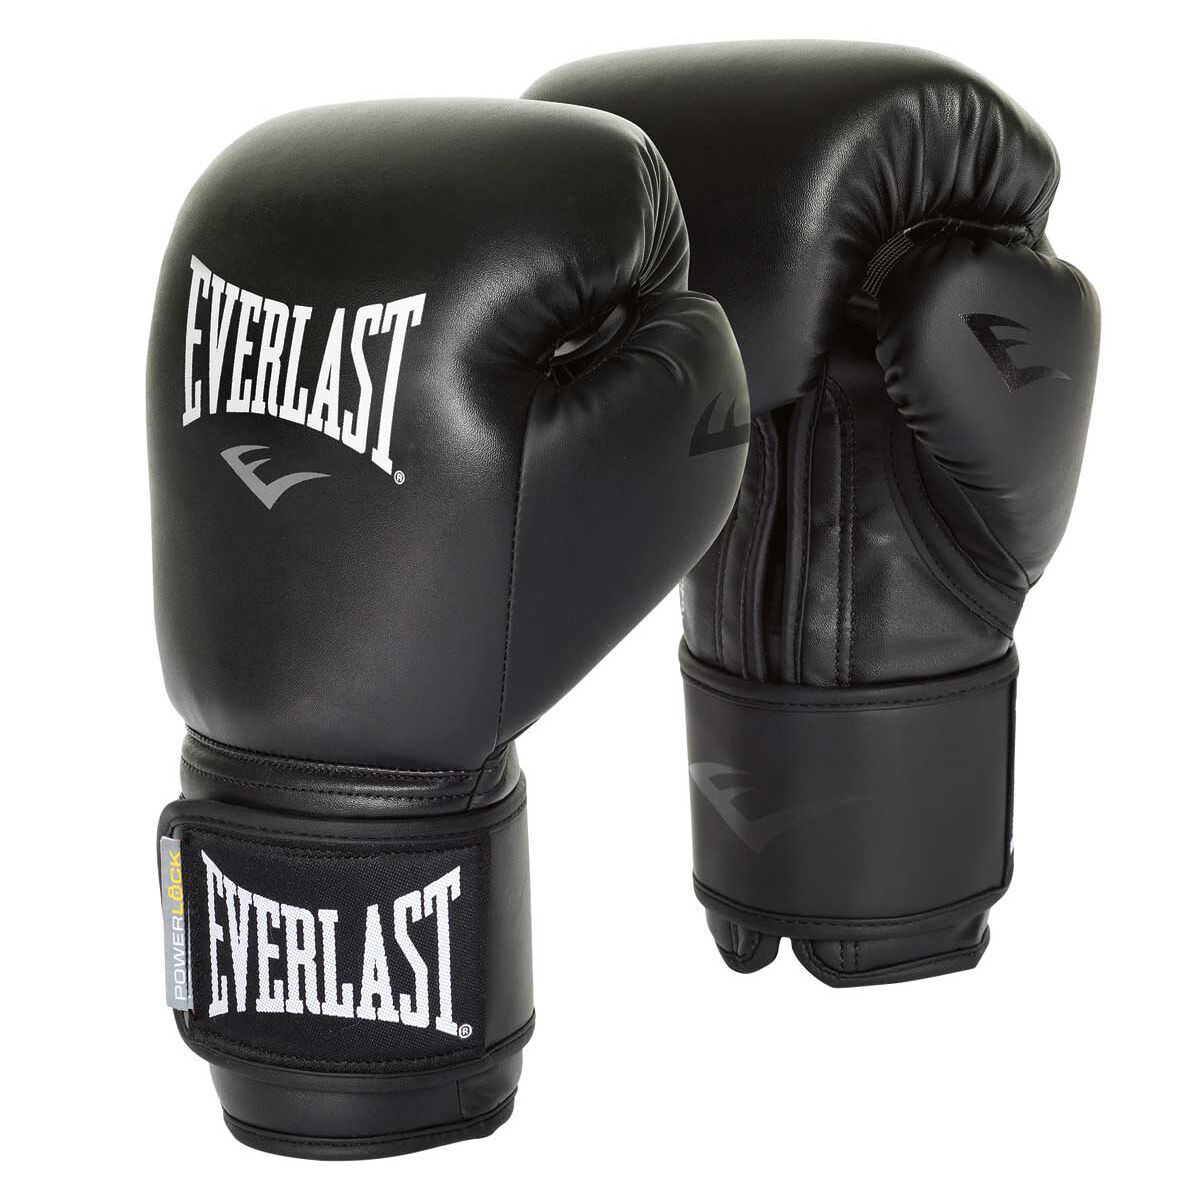 Everlast 12oz Professional Powerlock Training Boxing Gloves in Black/Silver 